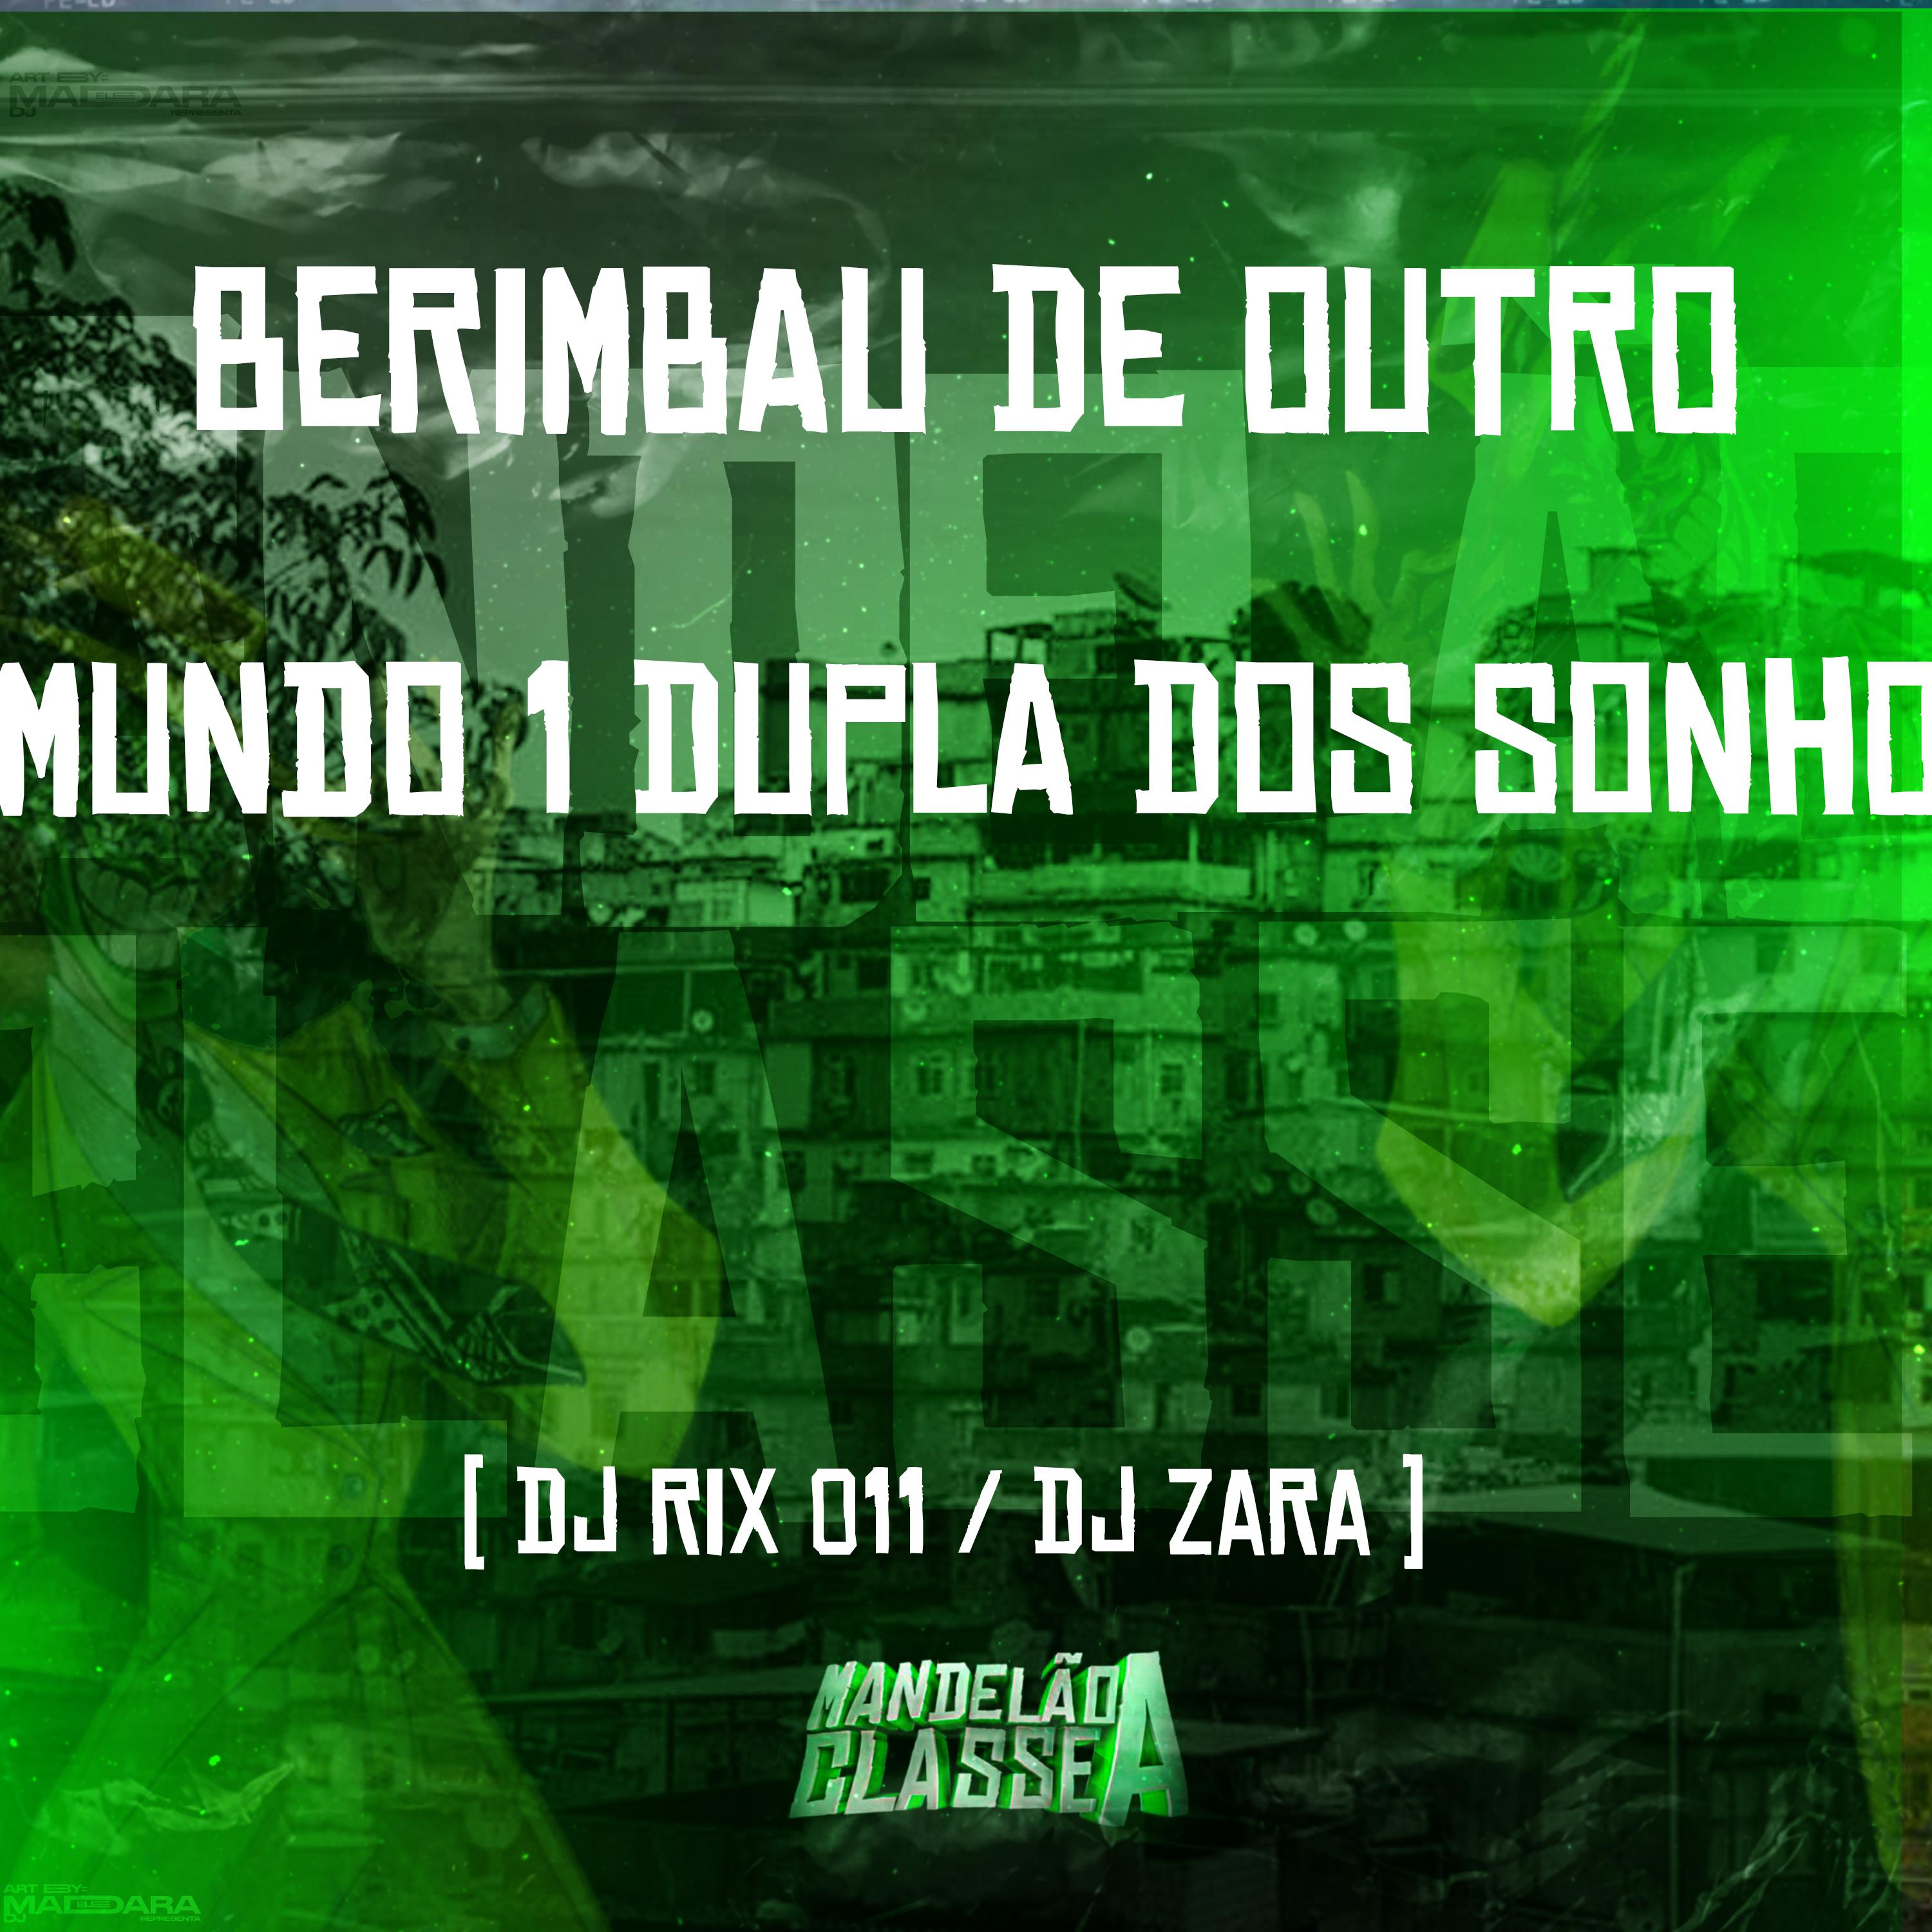 Постер альбома Berimbau de Outro Mundo  1   Dupla dos Sonhos